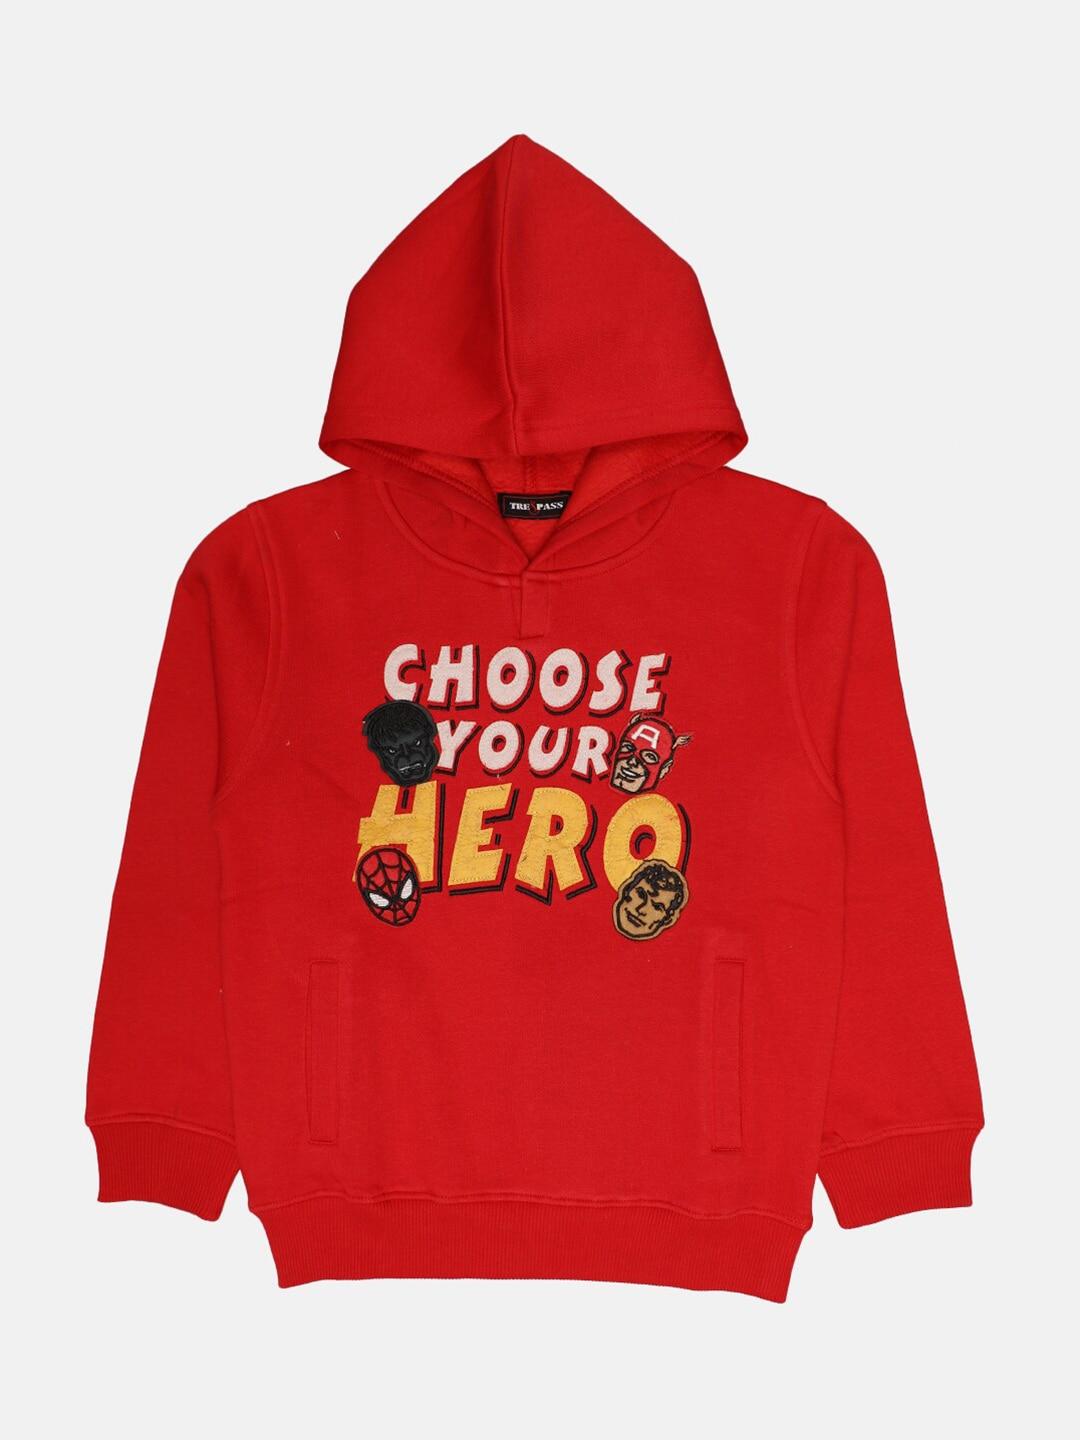 tre&pass-boys-red-printed-hooded-sweatshirt